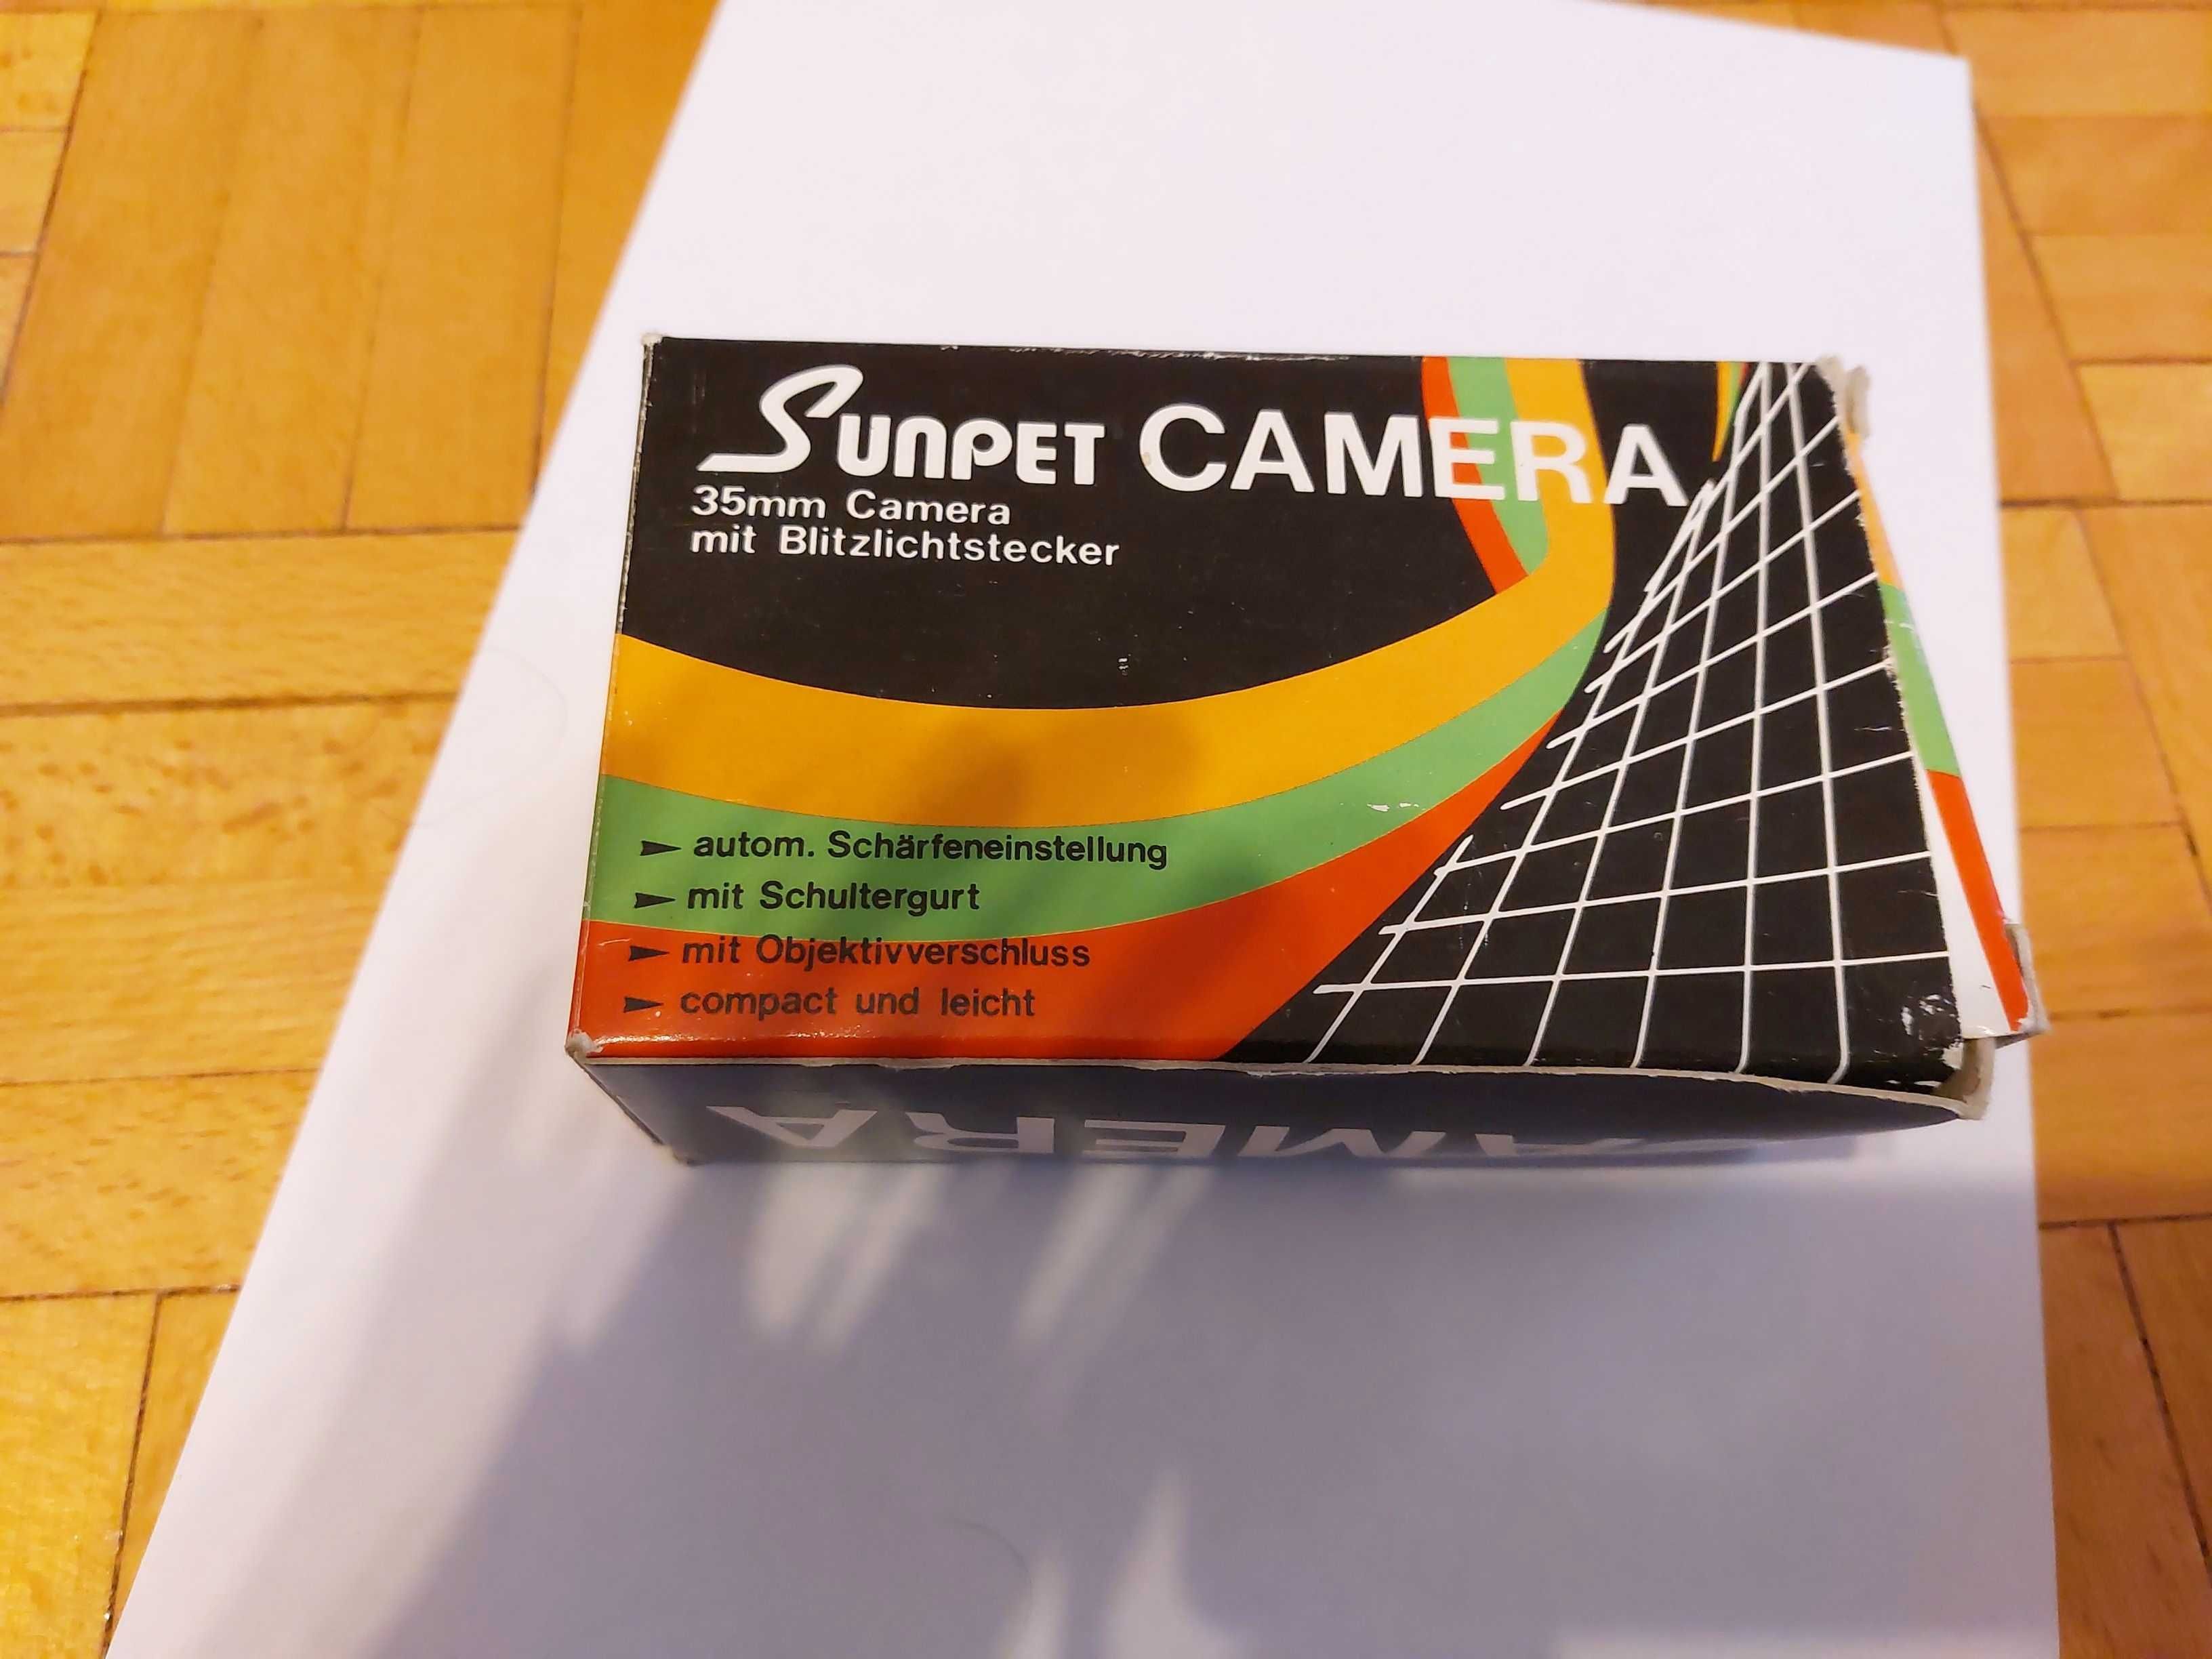 Sprzedam aparat Sunpet Camera 35mm